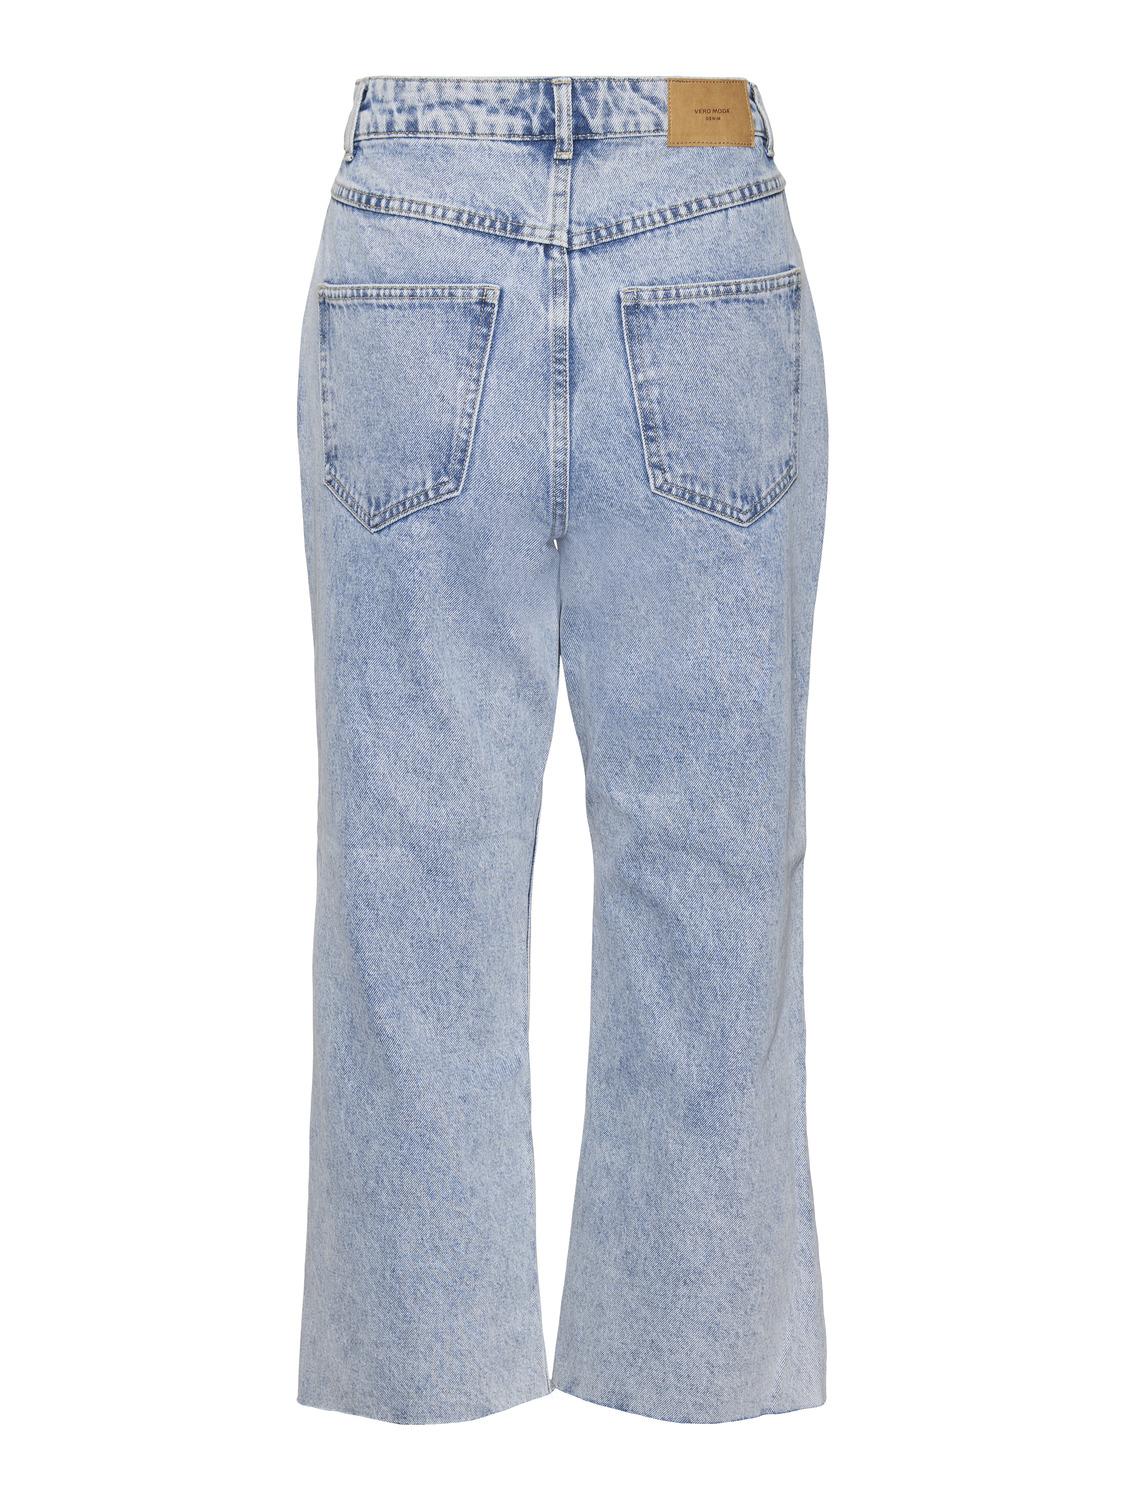 Kithy Jeans, Light Blue Denim, W28/L32